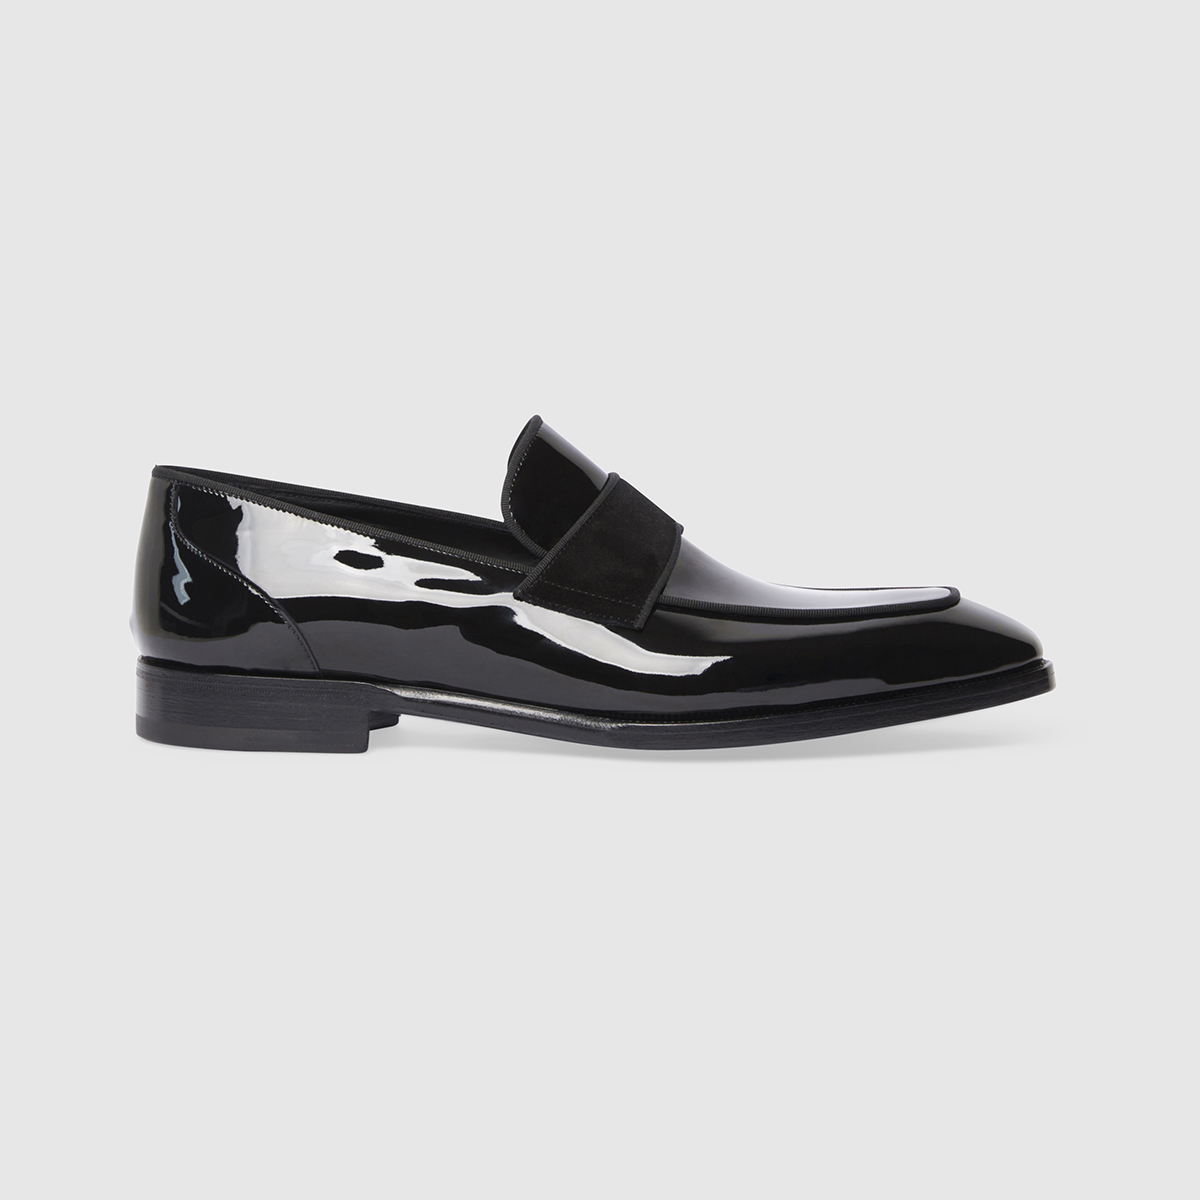 Classic Fabi Flex Loafers in Patent Black Gruppo Fabi on sale 2022